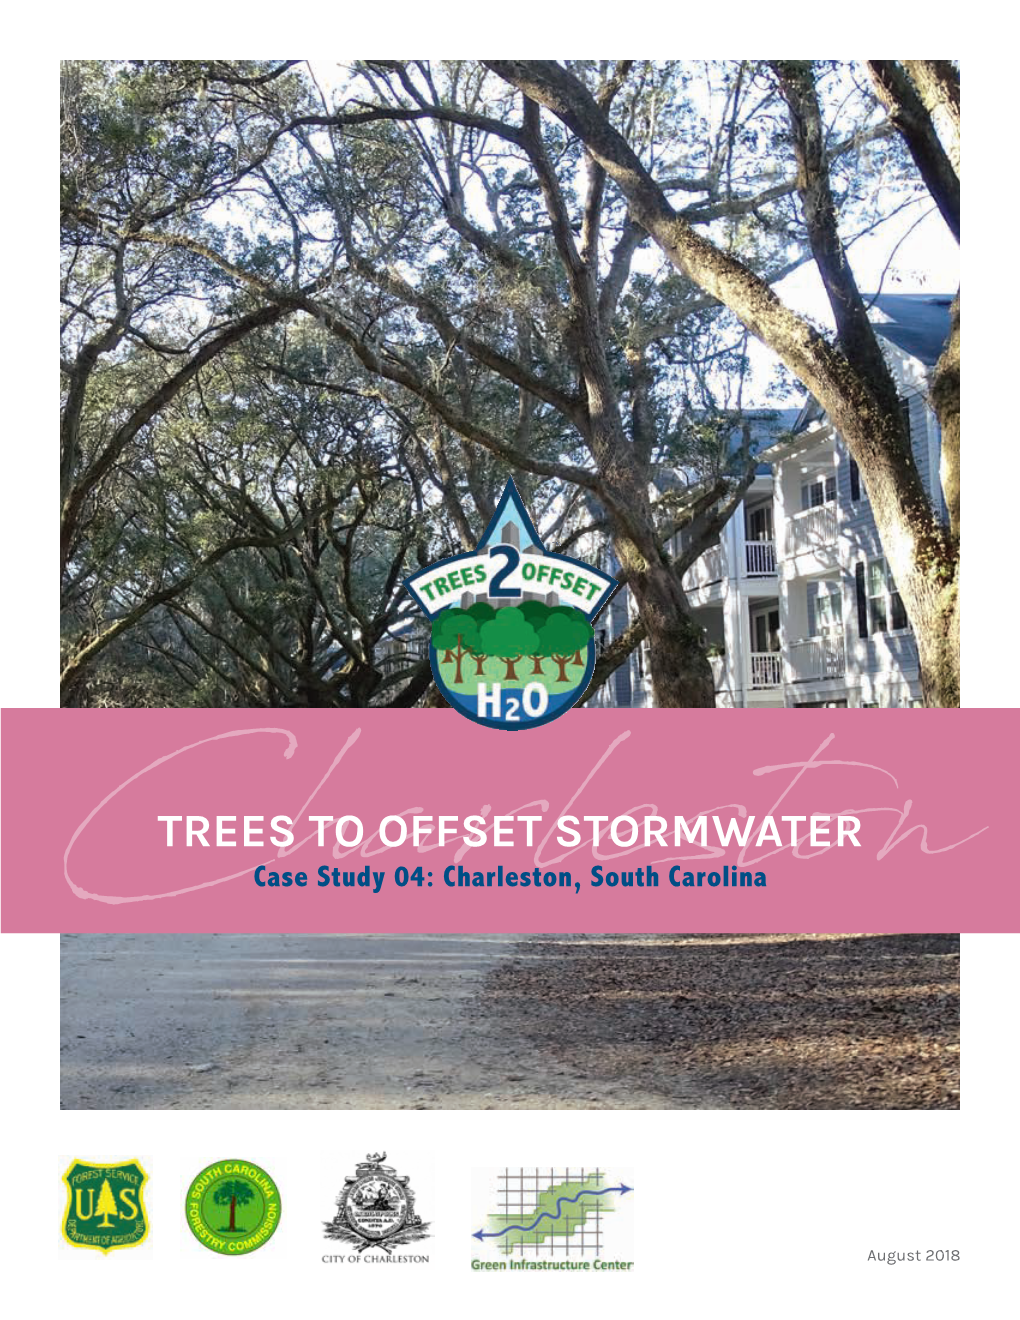 TREES to OFFSET STORMWATER Charlestoncase Study 04: Charleston, South Carolina